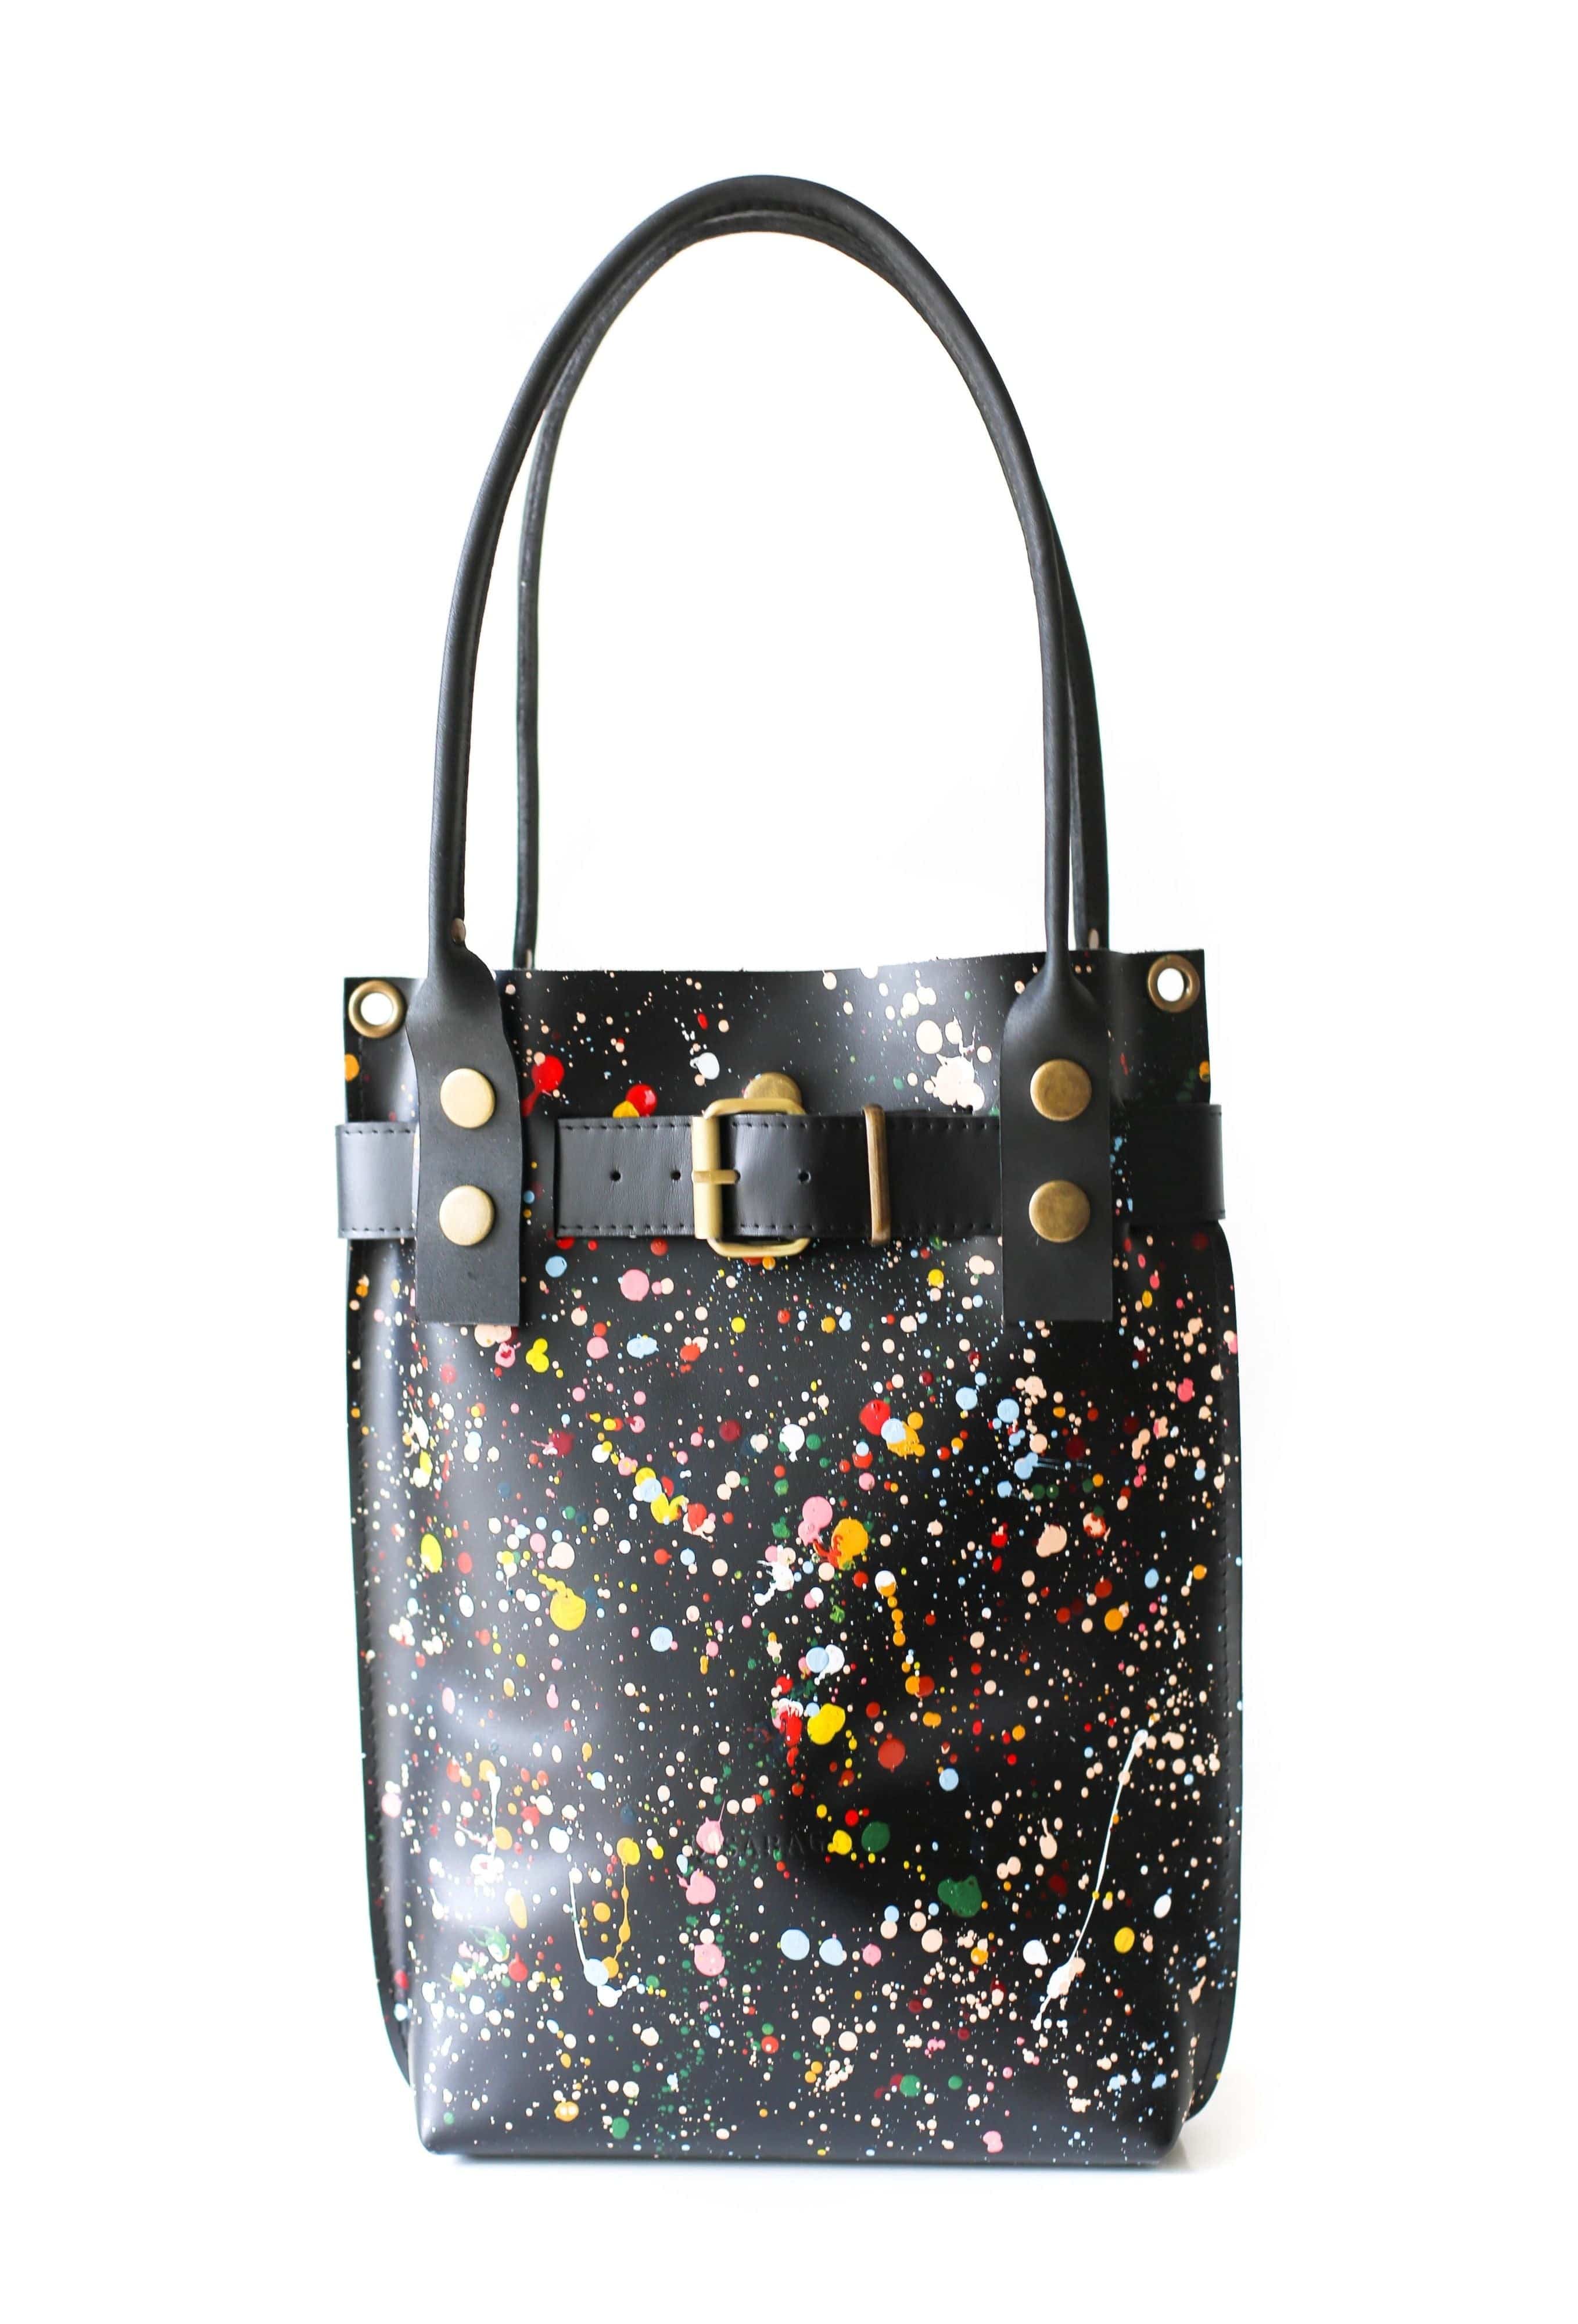 Xajzpa - Luxury Designer Handbag High Quality Leather Black